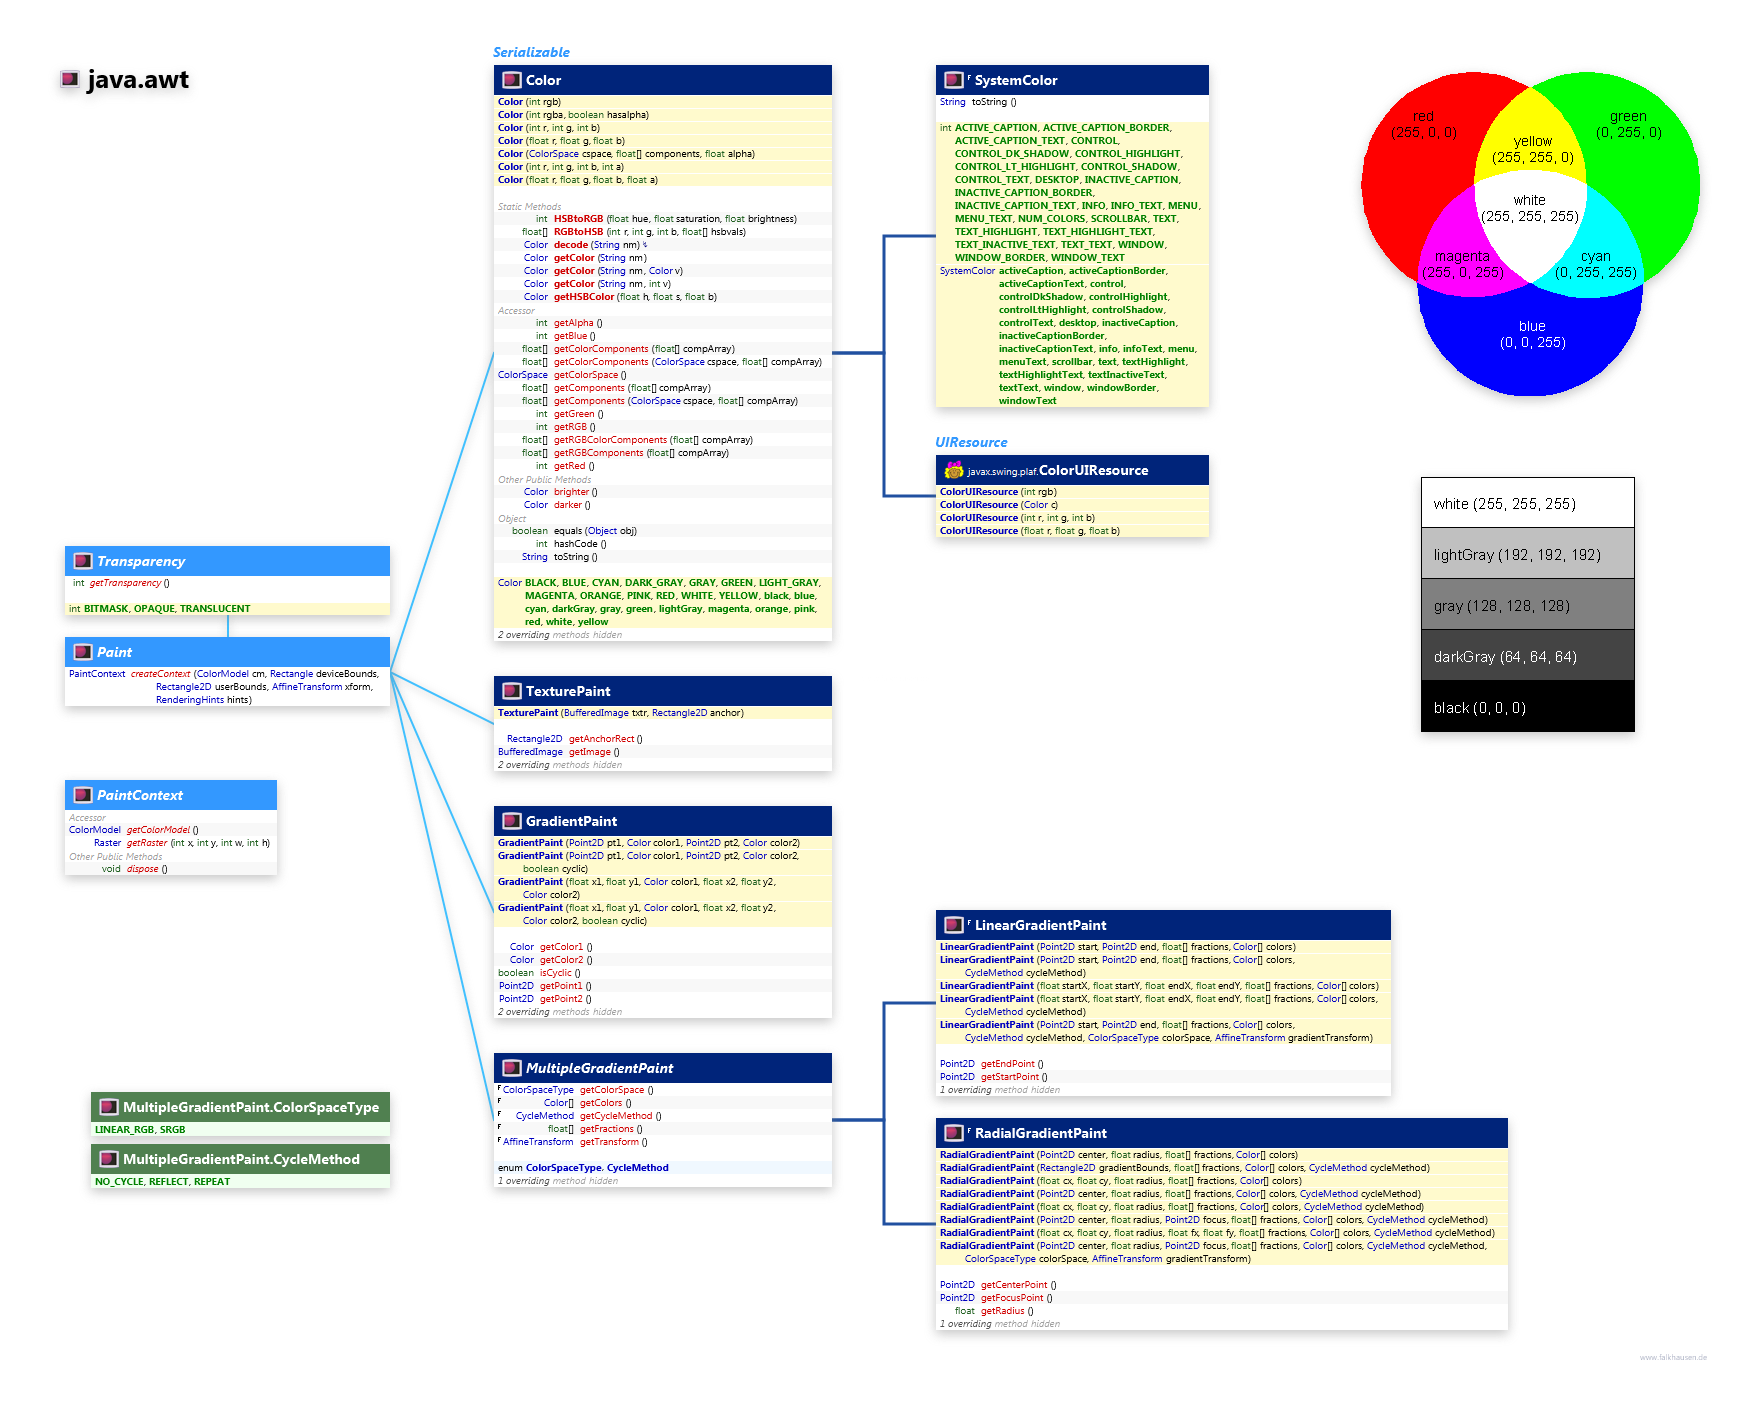 java.awt Paint class diagram and api documentation for Java 8